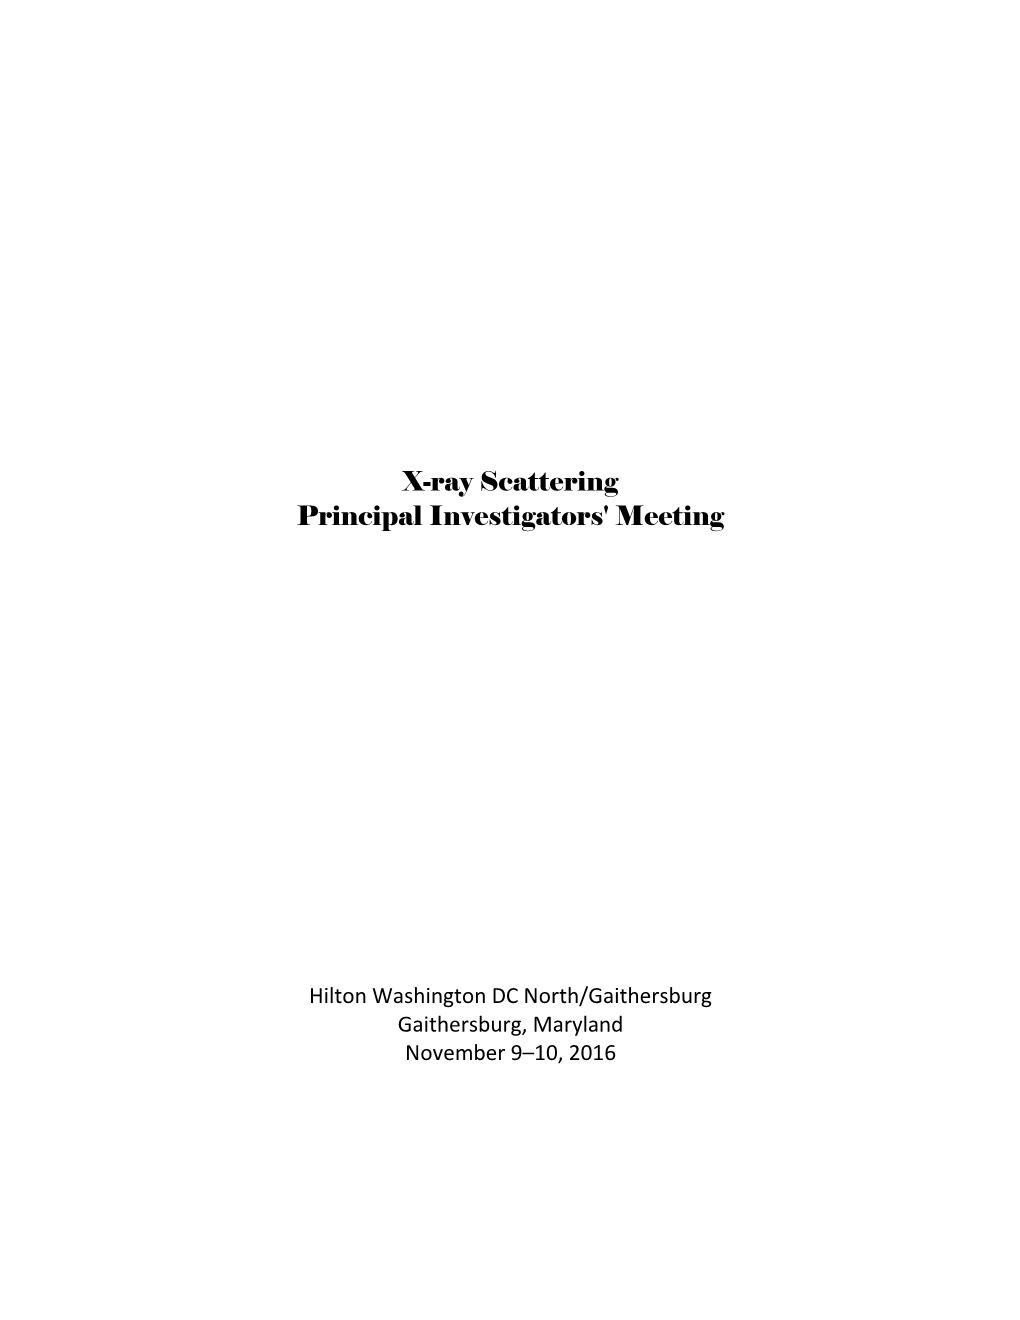 X-Ray Scattering Principal Investigators' Meeting